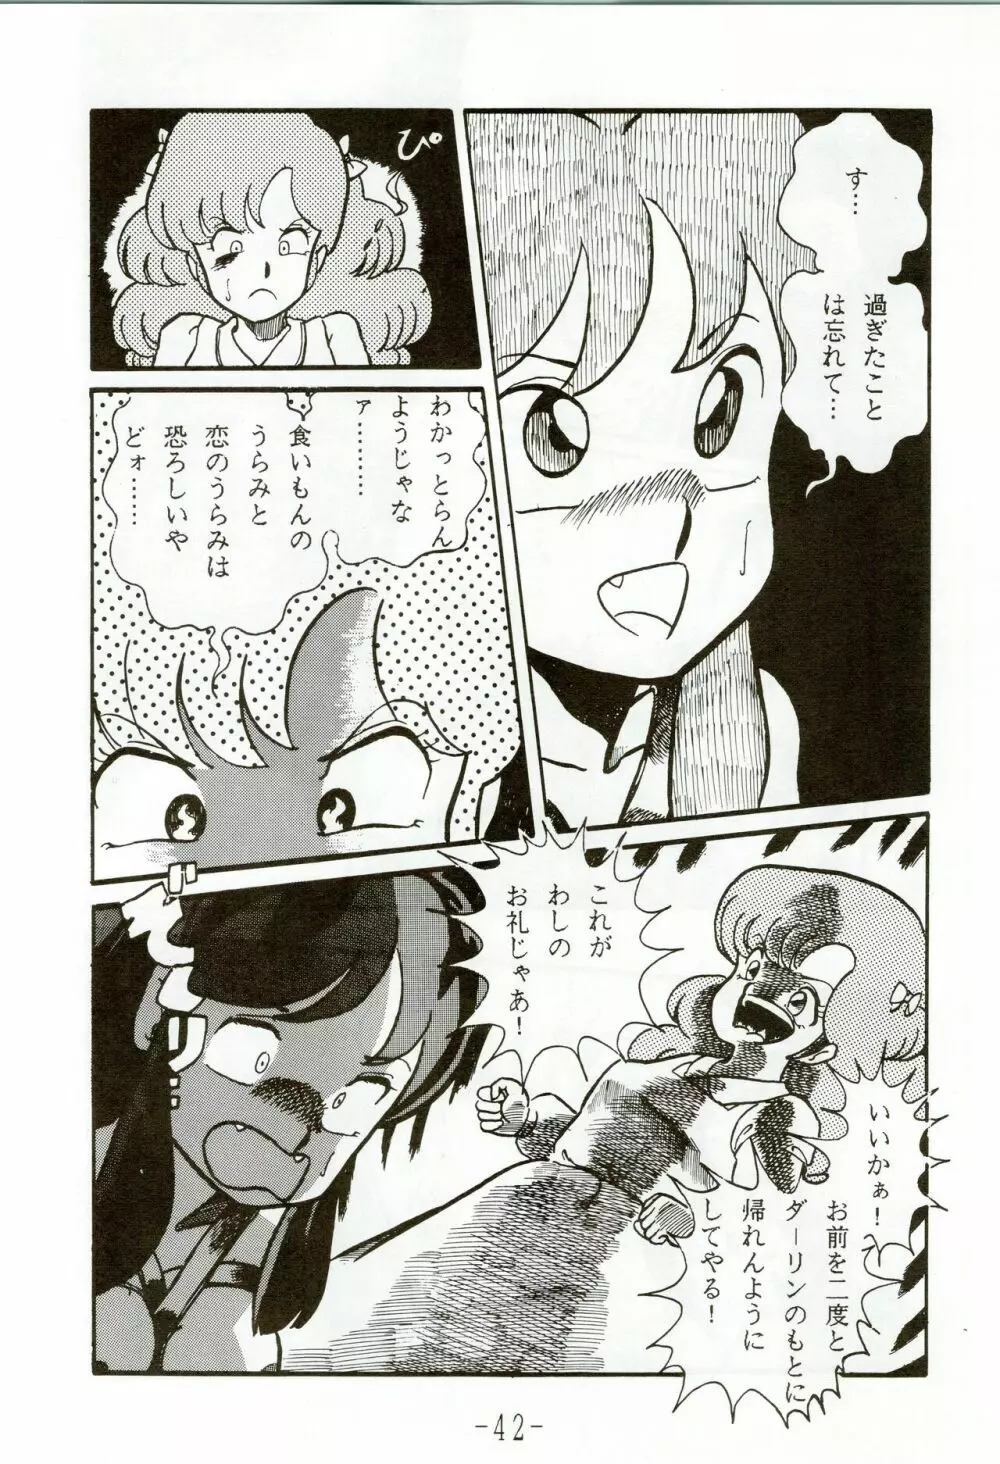 甲冑伝説 - page42